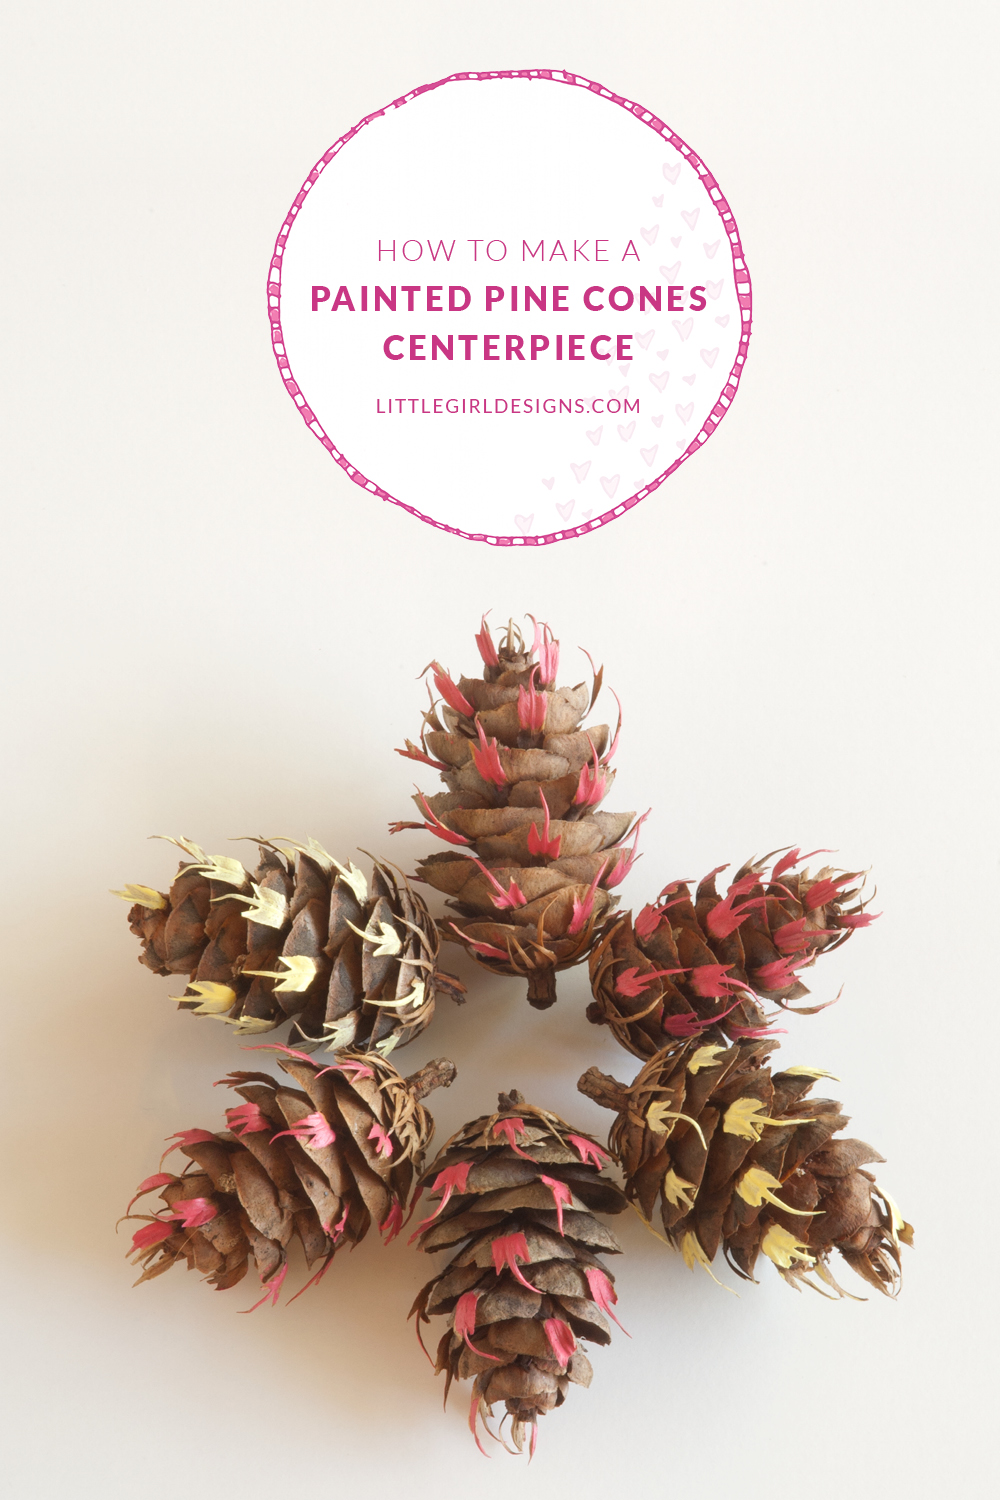 Painted Pine Cones Centerpiece